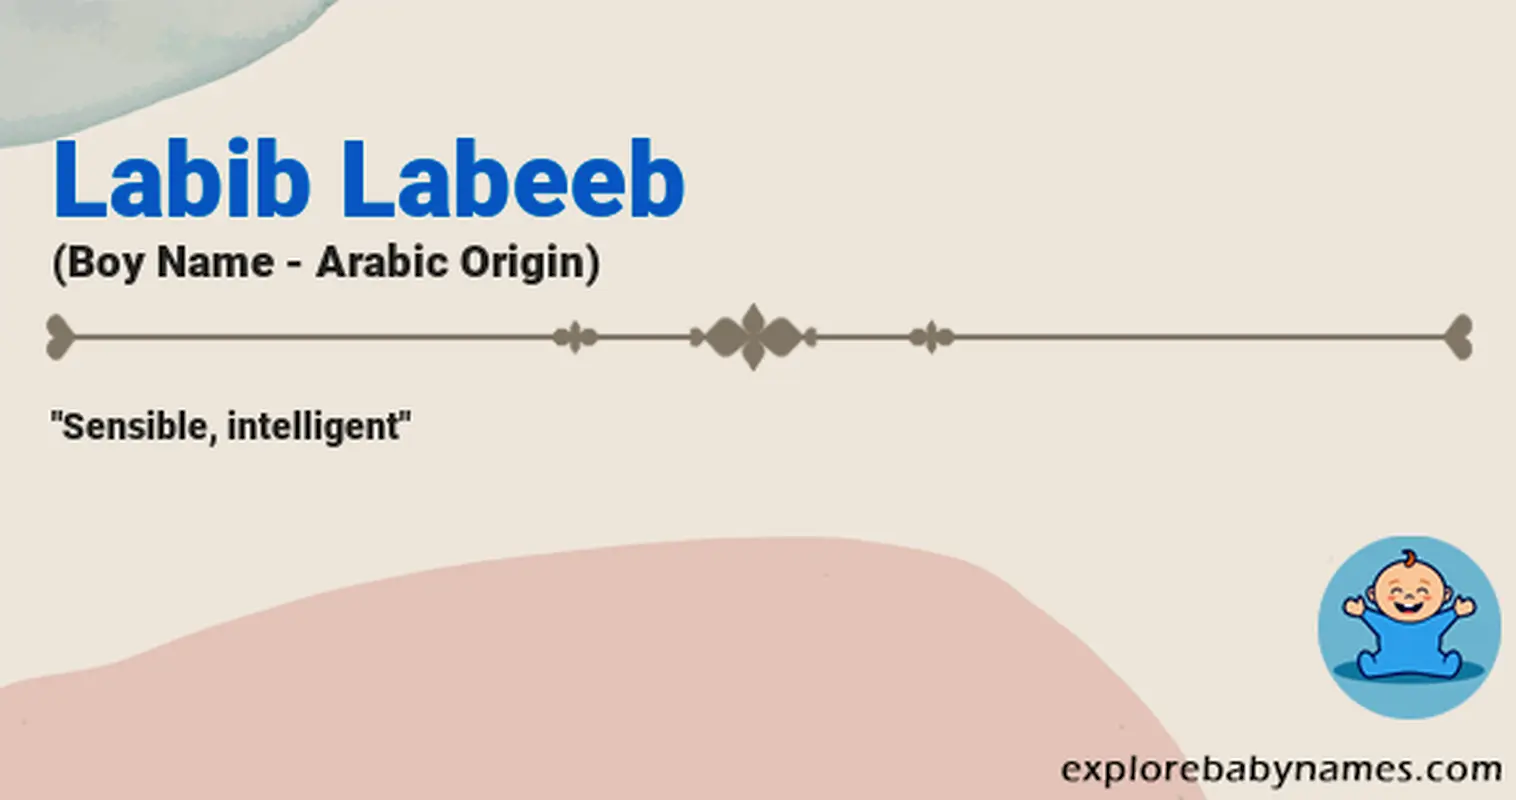 Meaning of Labib Labeeb